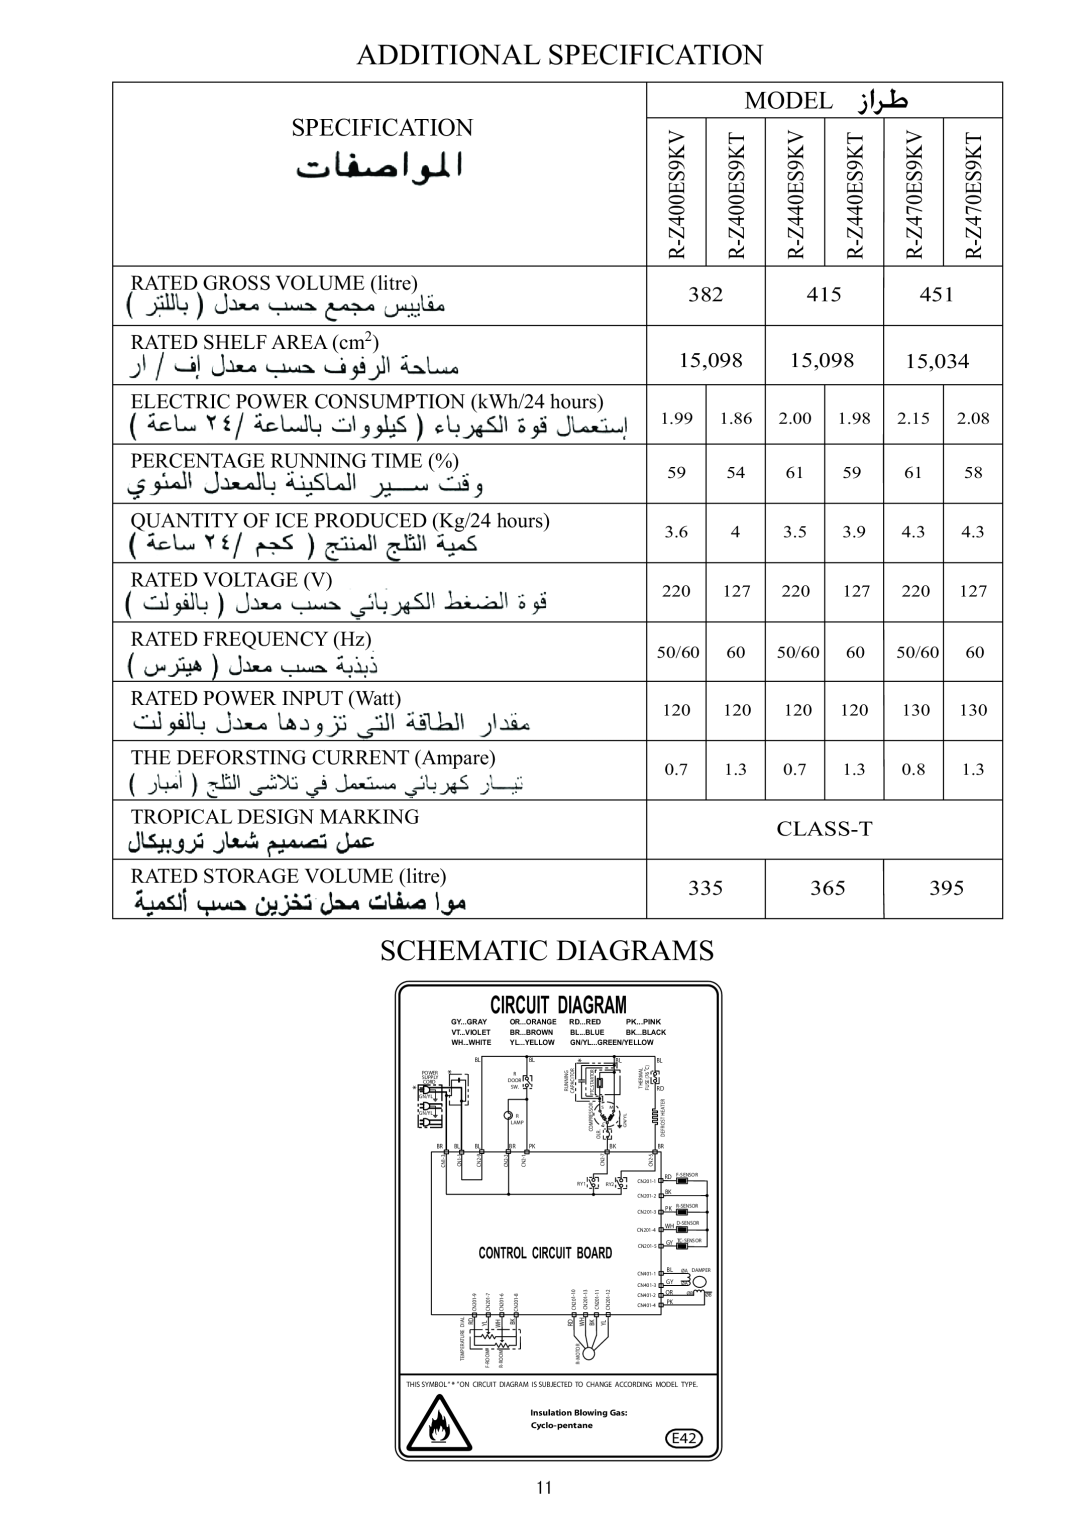 Hitachi R-4040HT SLS Silver, R-Z451EMS(X), R-Z460EM(X) Additional Specification, Schematic Diagrams, Model, Circuit Diagram 